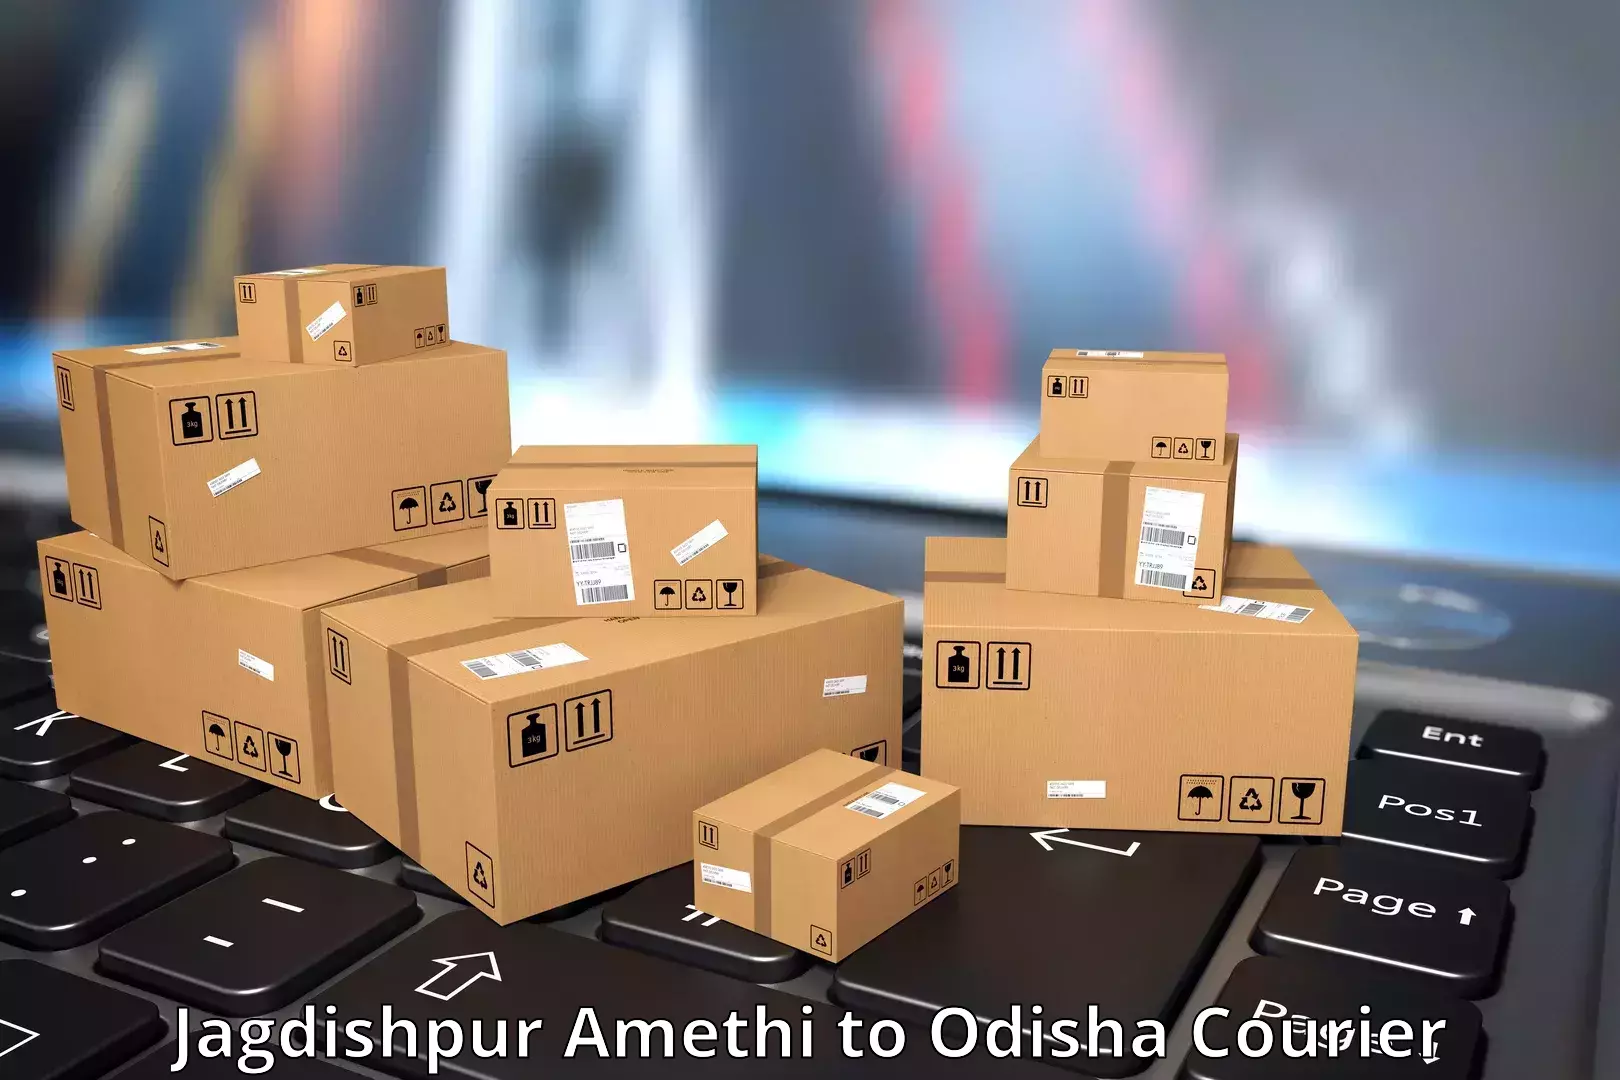 Flexible delivery schedules Jagdishpur Amethi to Rourkela